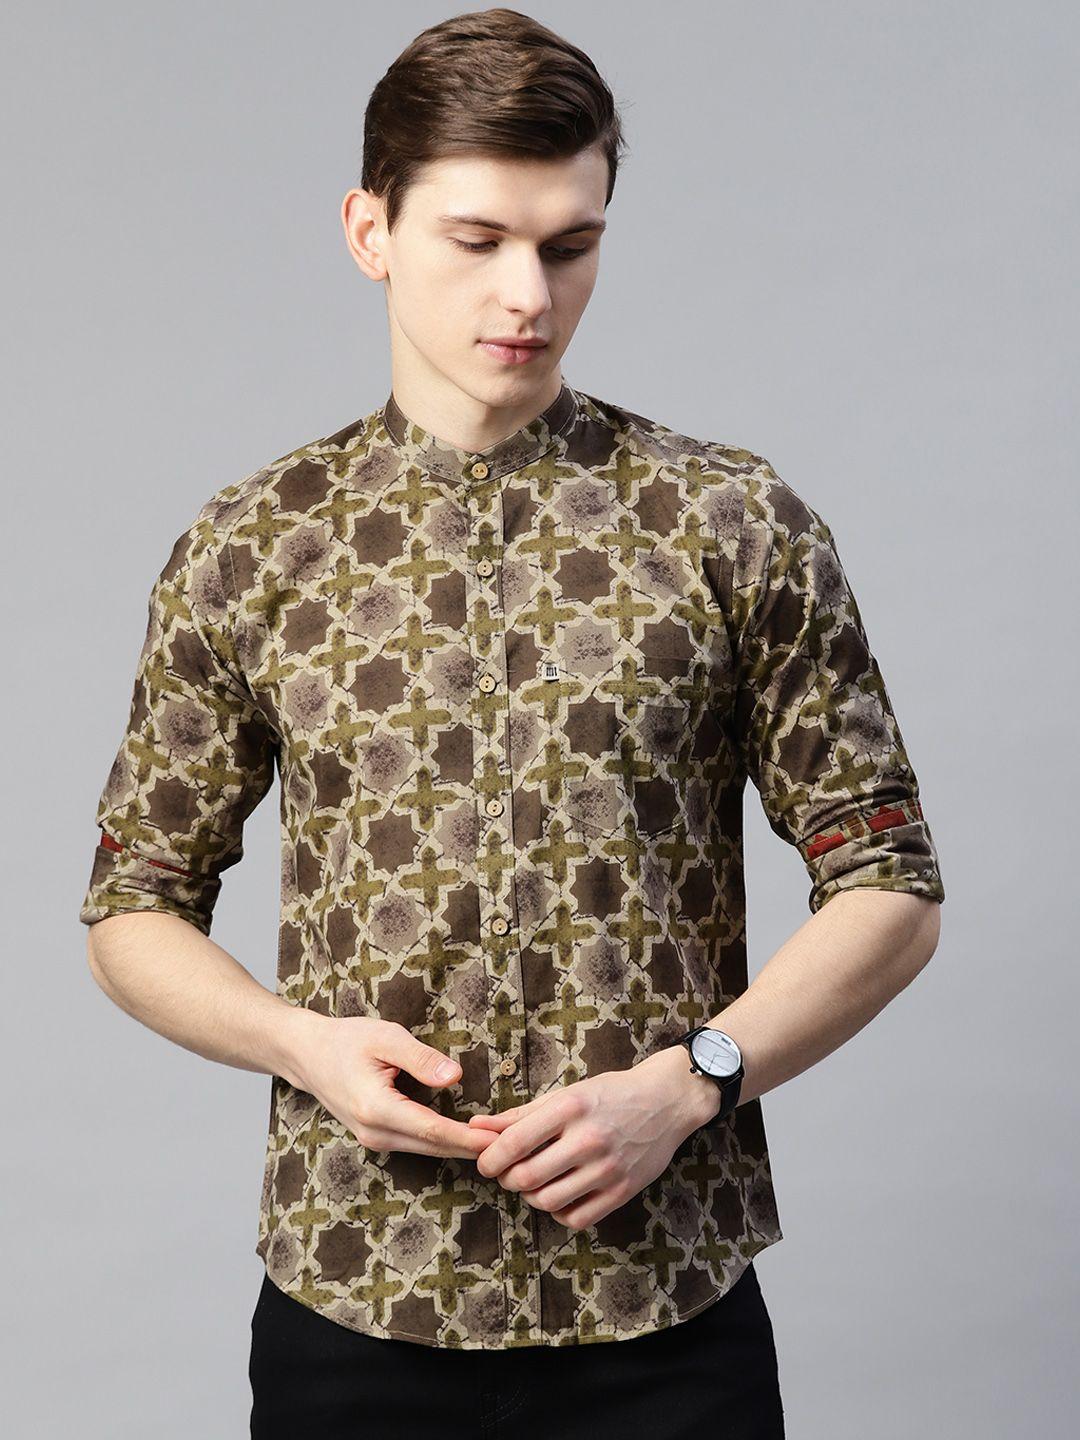 readiprint fashions men olive green & brown comfort printed cotton casual shirt